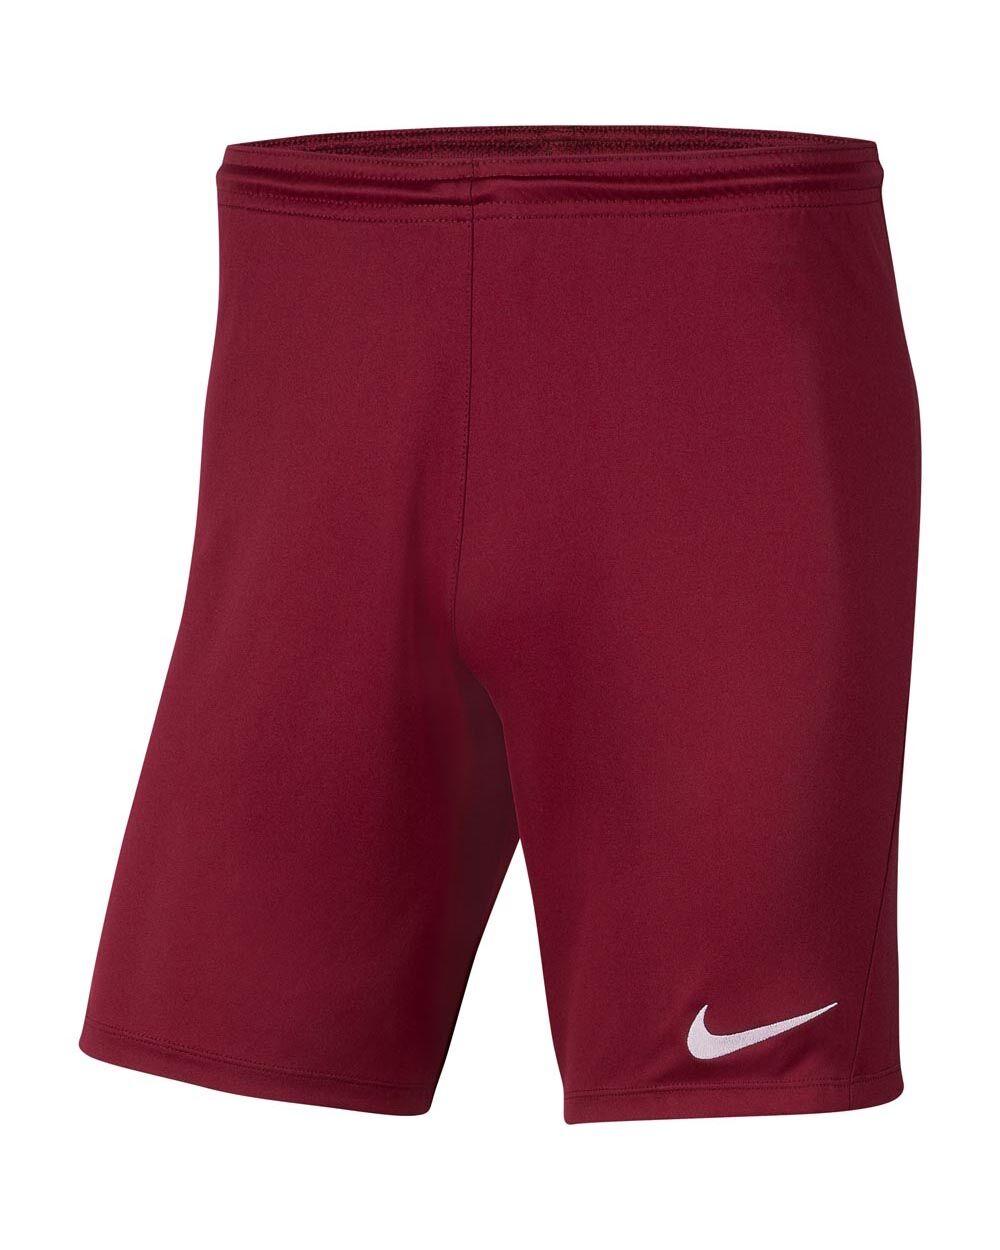 Pantalón corto Nike Park III Burdeos para Niño - BV6865-677